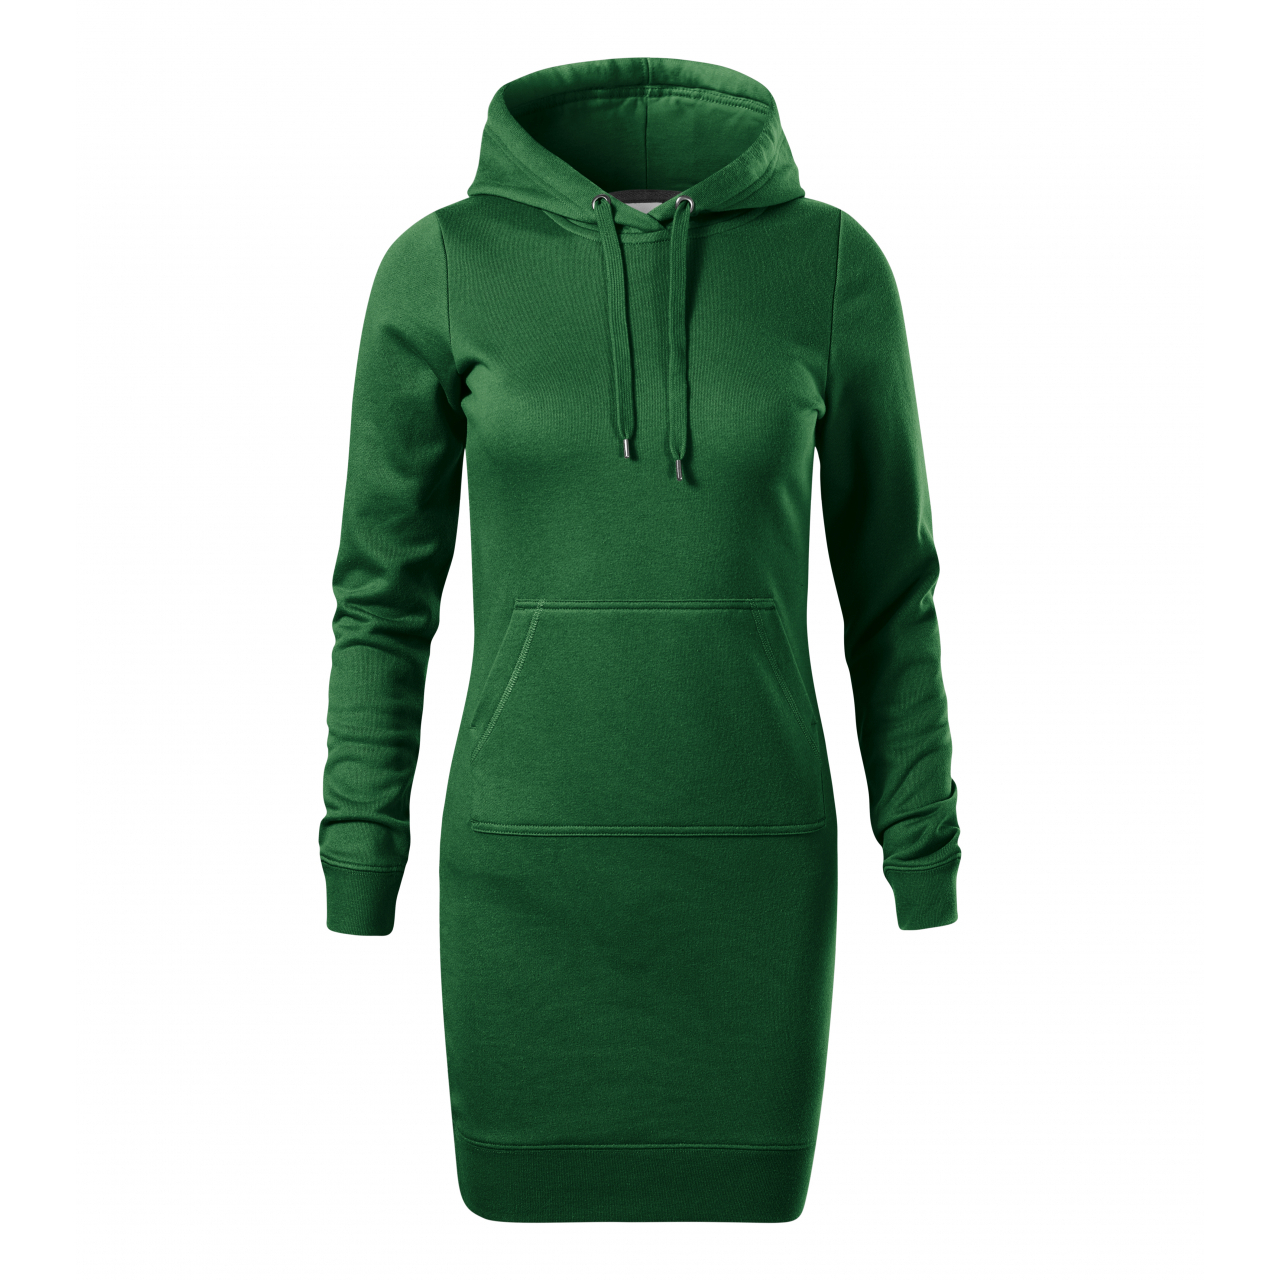 Šaty dámské Malfini Snap - tmavě zelené, XL